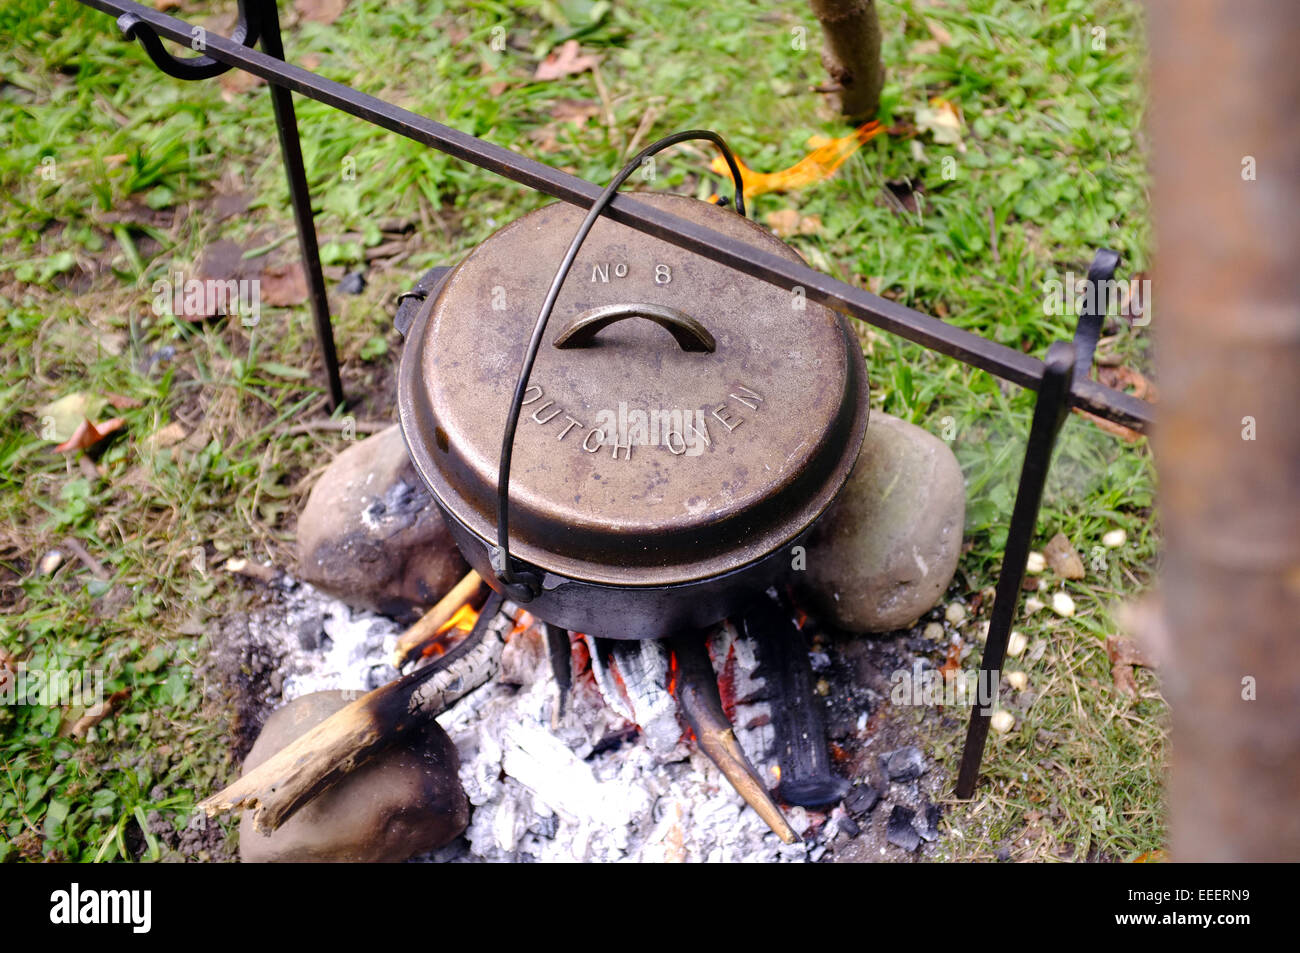 Backyard Garden Camp Table Dutch Oven Cooking W Wind Shield